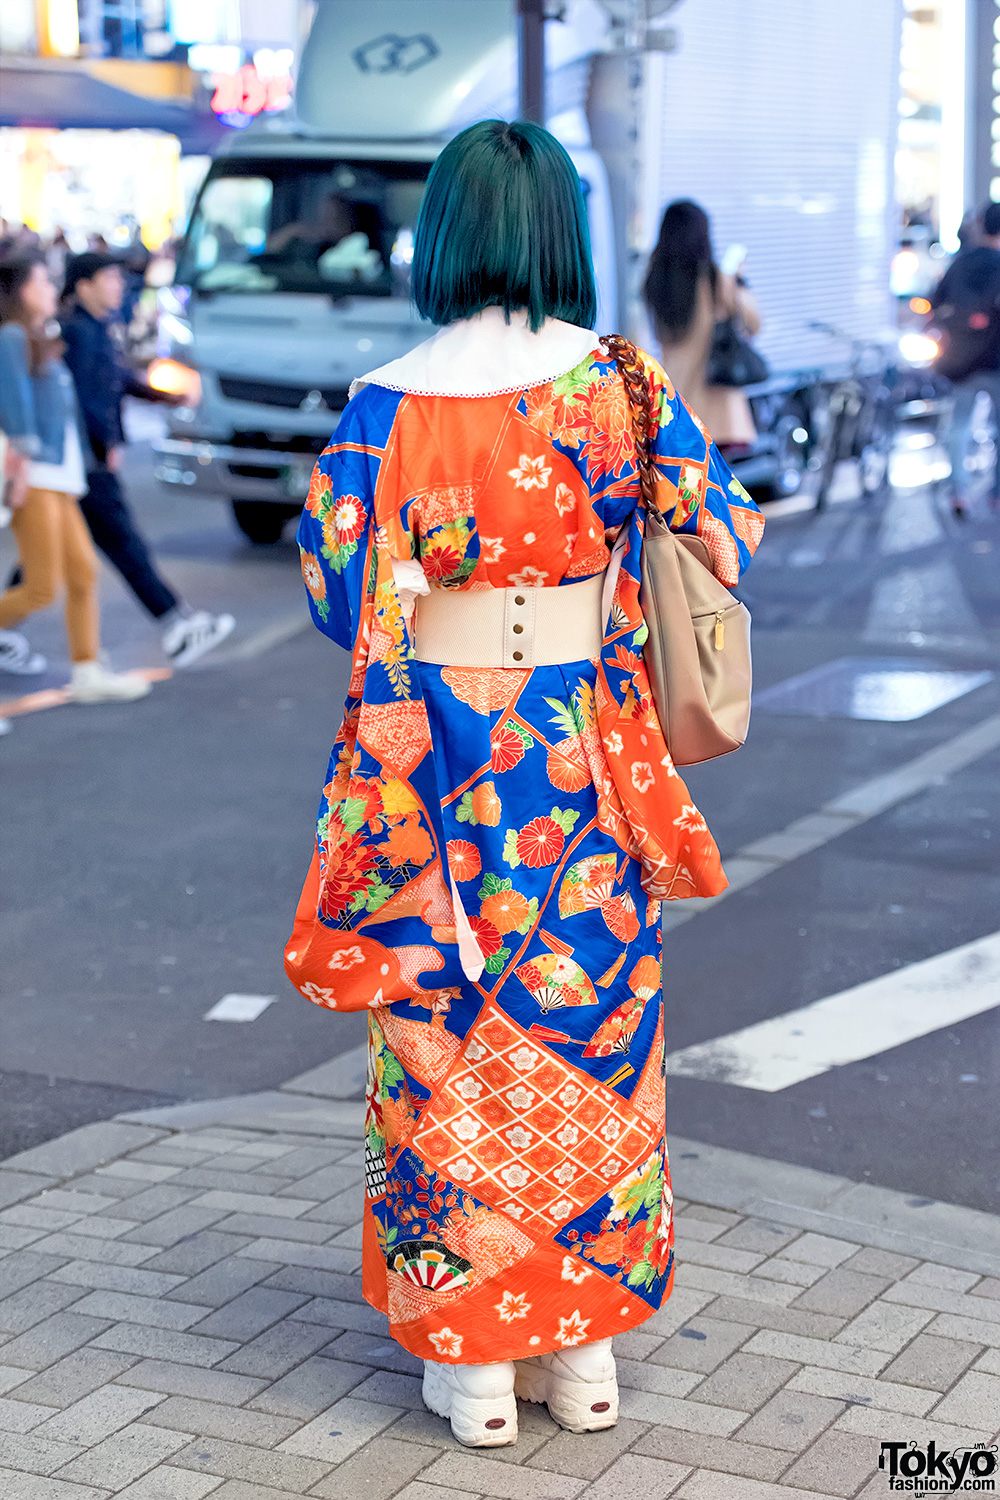 Kimono Jacket, Corset, Blue Hair & Winged Shoes in Harajuku – Tokyo Fashion